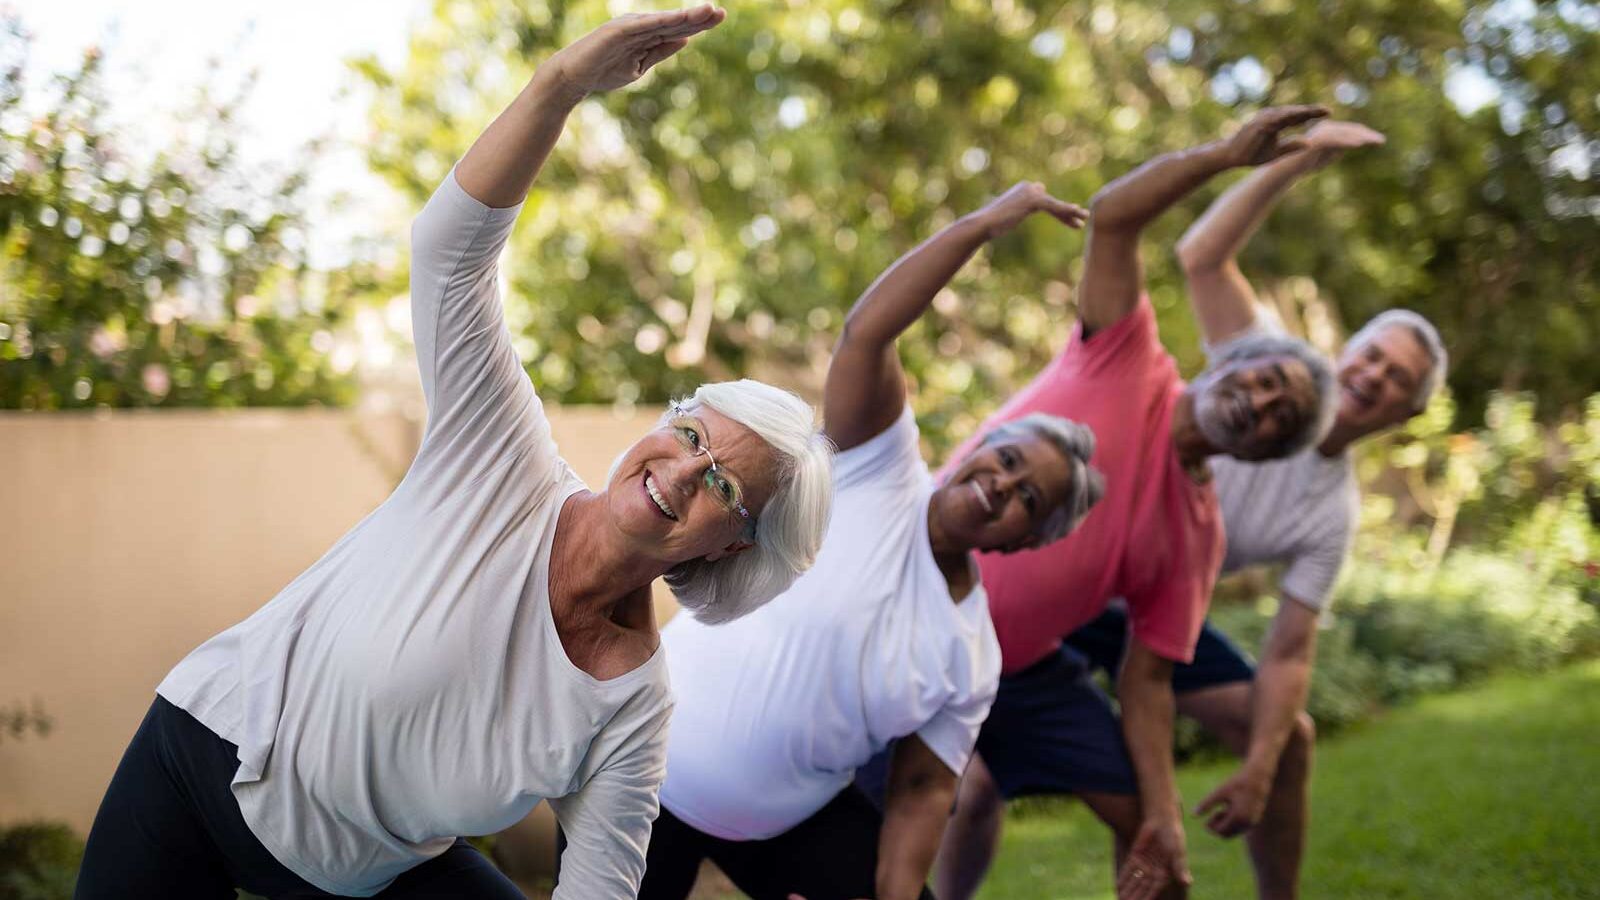 Wellness - Capital Area Agency on Aging